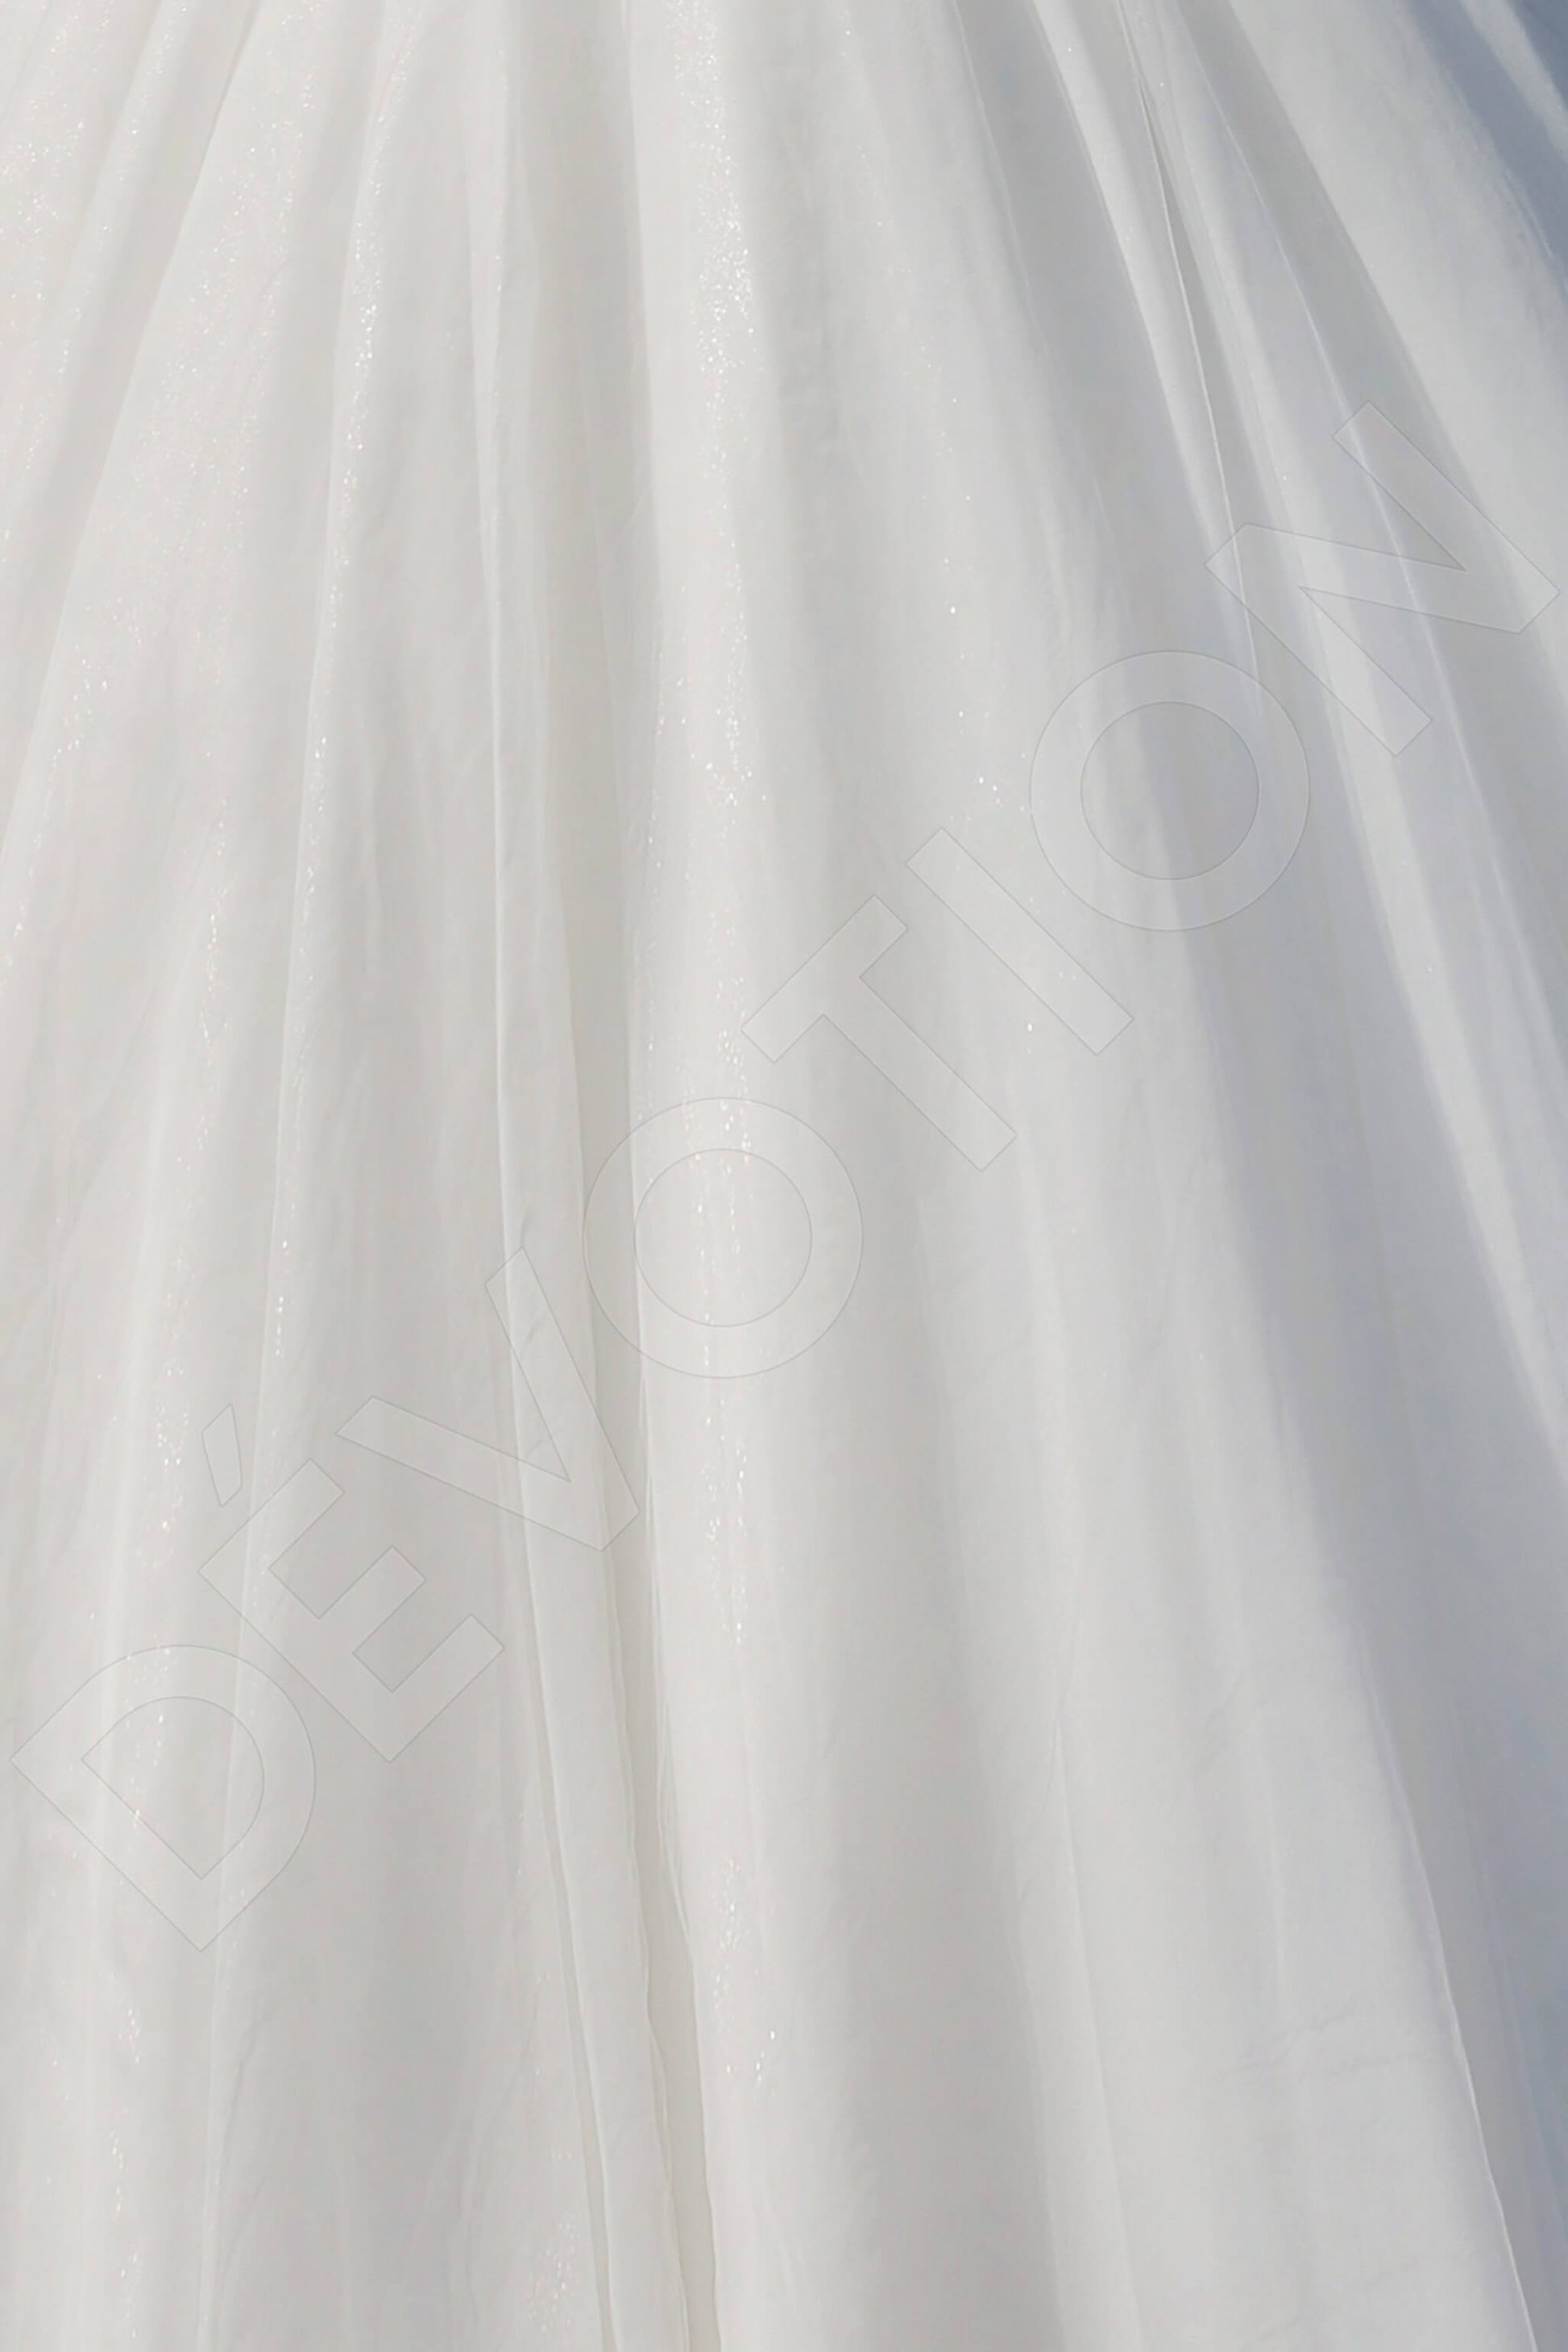 Milona Princess/Ball Gown Boat/Bateau White Wedding dress